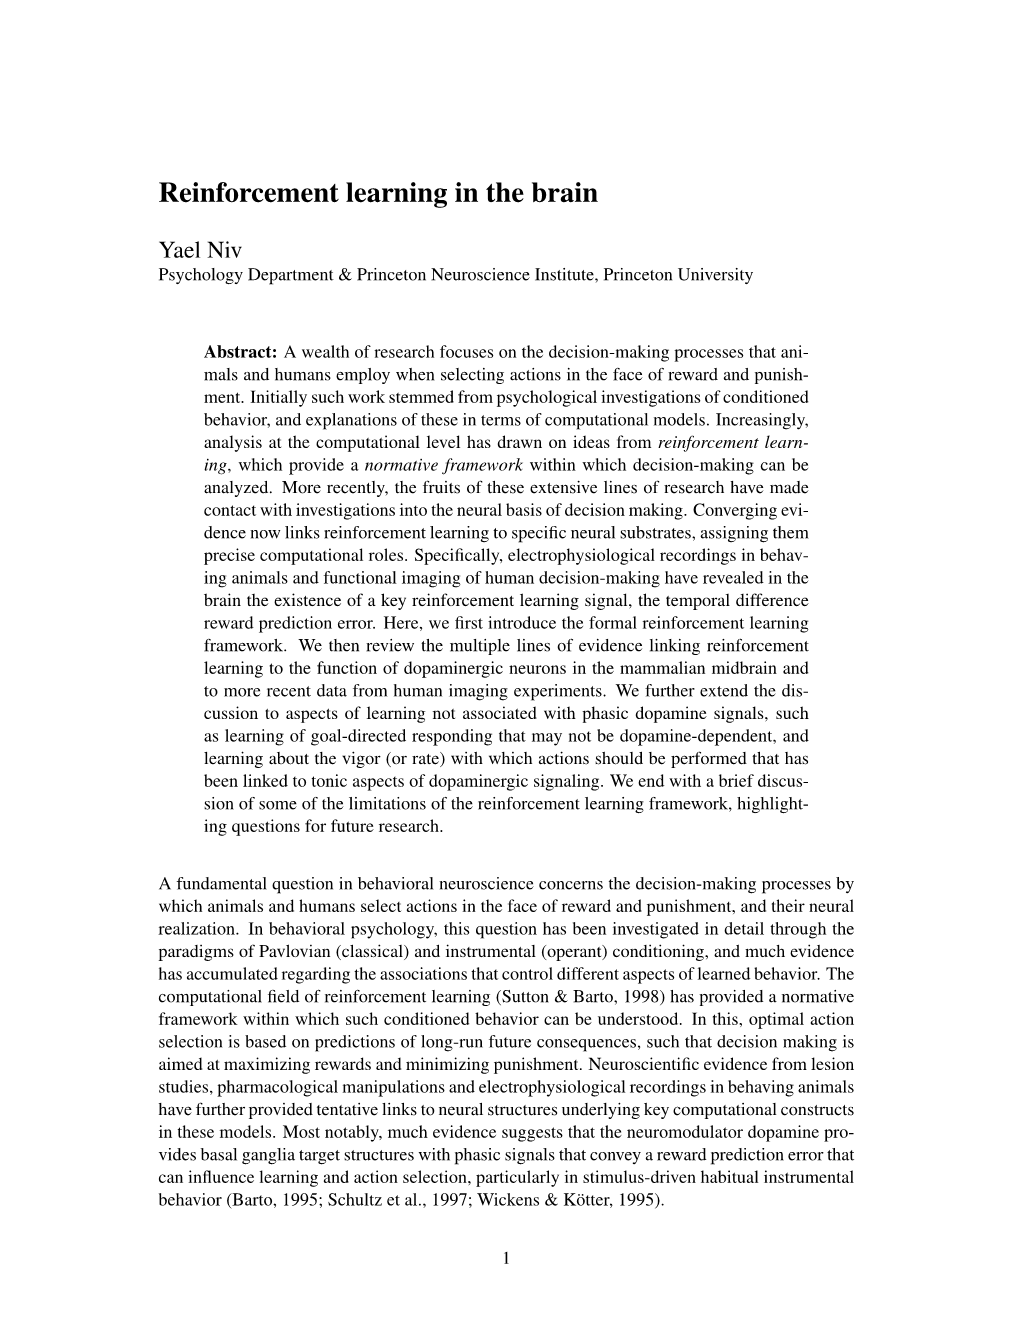 Reinforcement Learning in the Brain